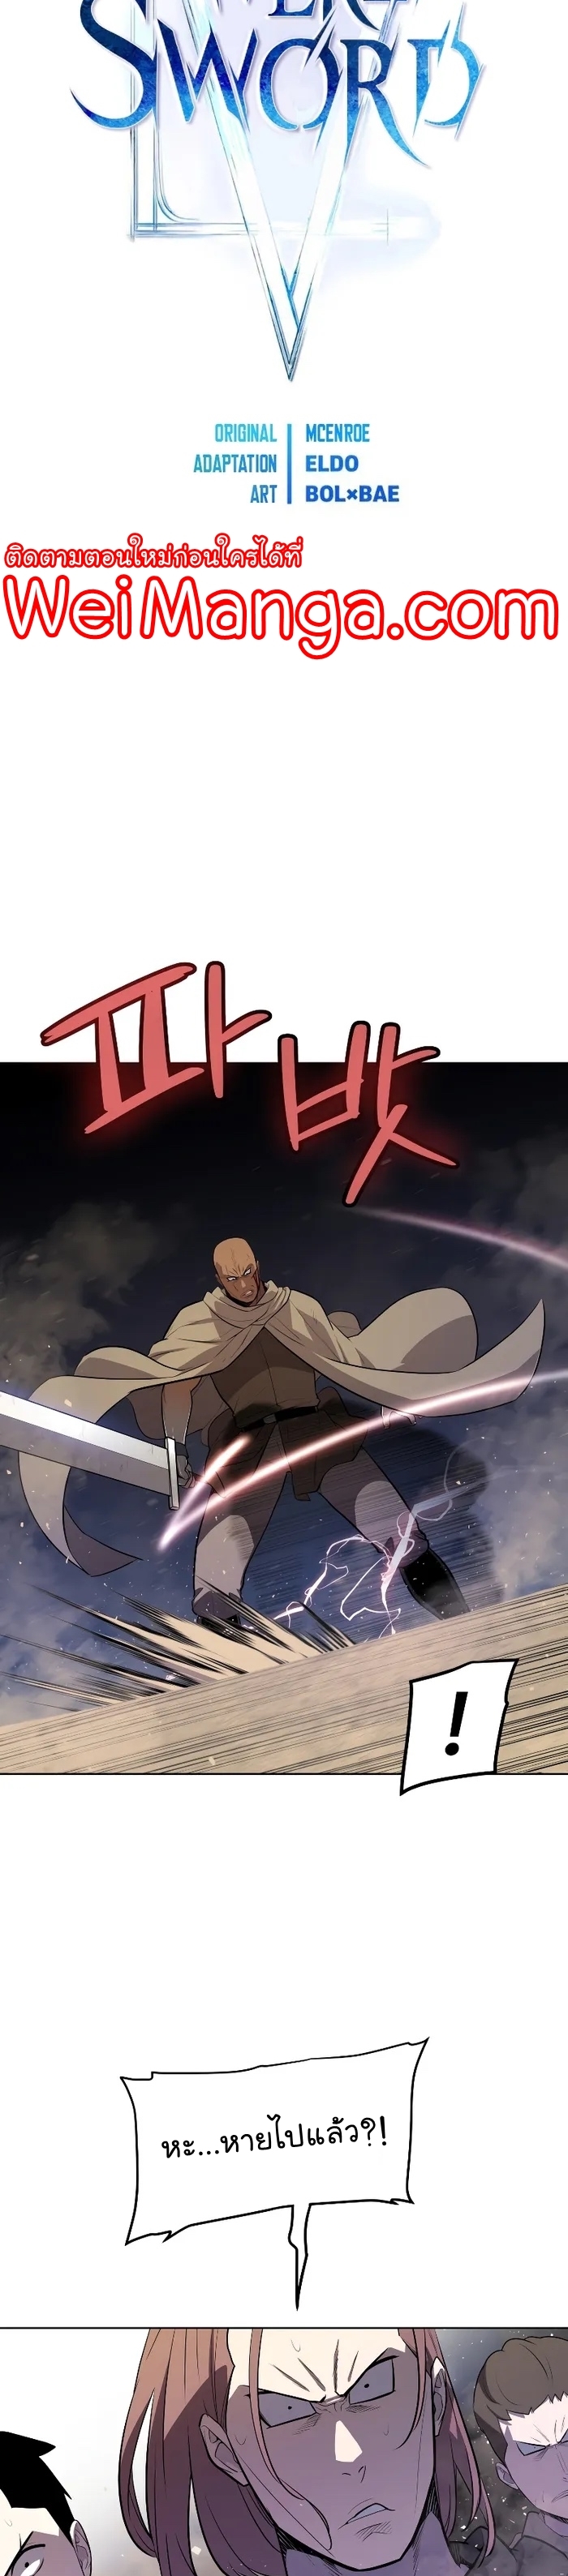 Overpower Sword Manga Wei 66 (3)